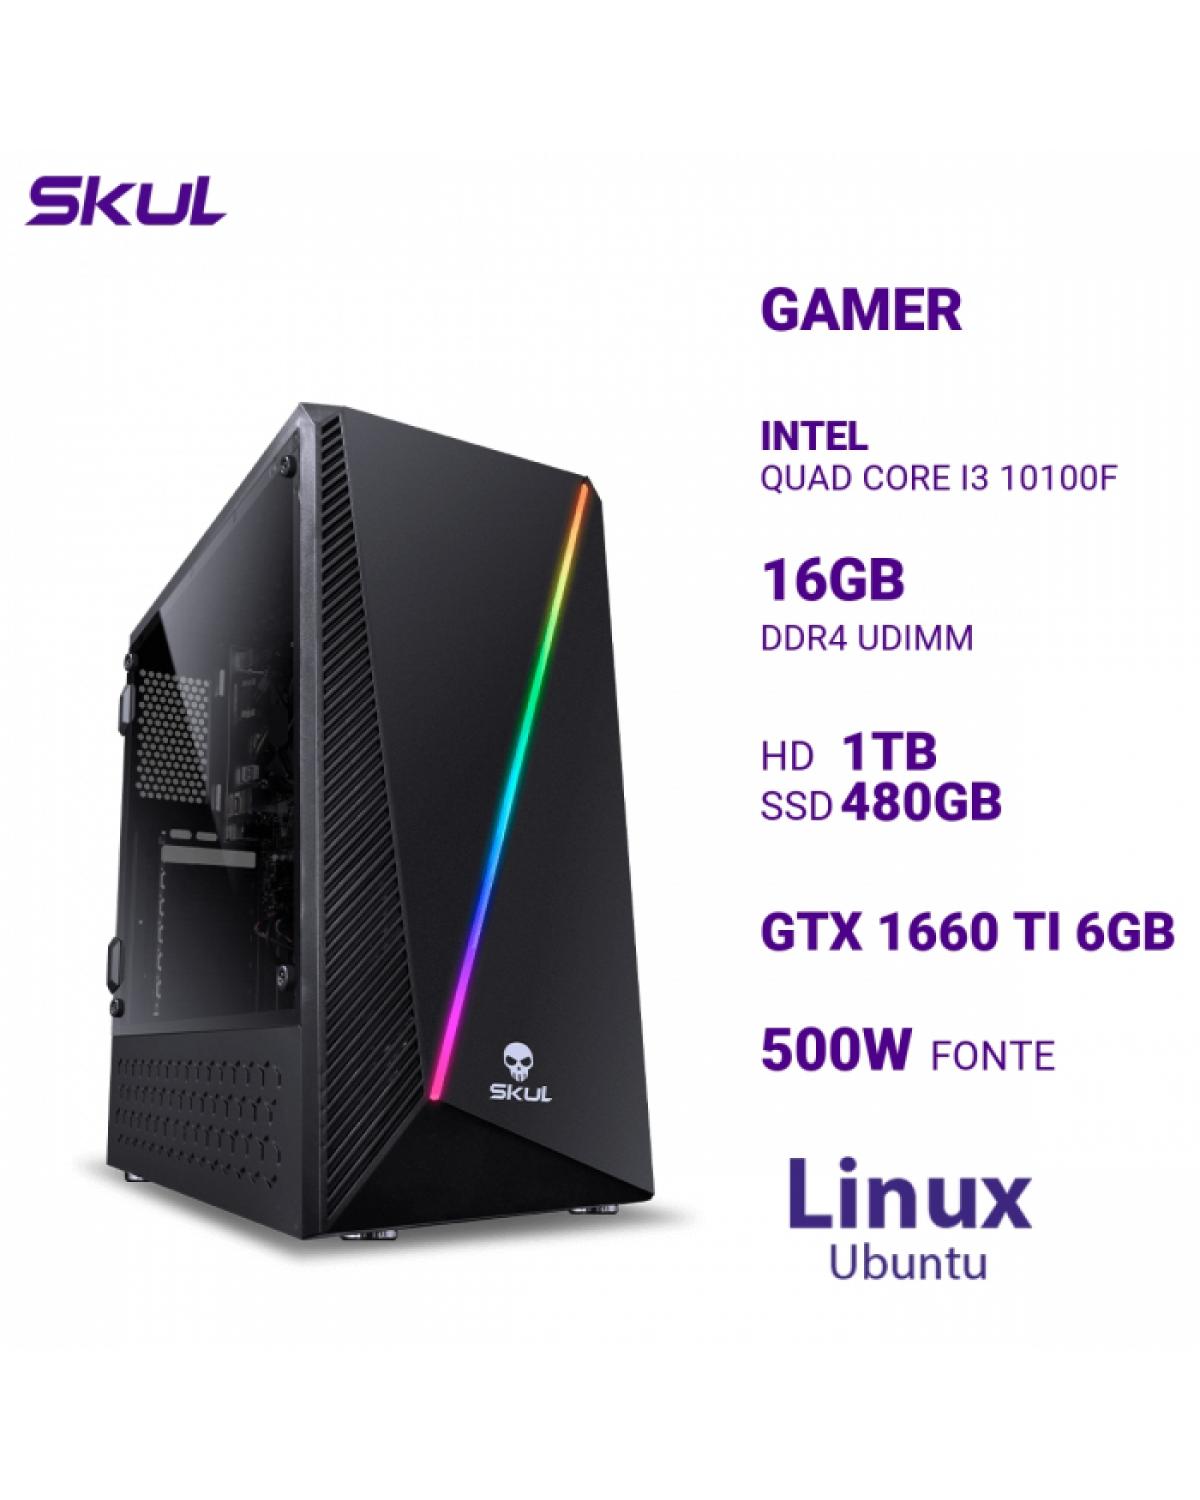 COMPUTADOR GAMER 3000 QUAD CORE I3 10100F MEM 16GB DDR4 HD 1TB SSD 480GB GTX 1660 TI 6GB FONTE 500W LINUX